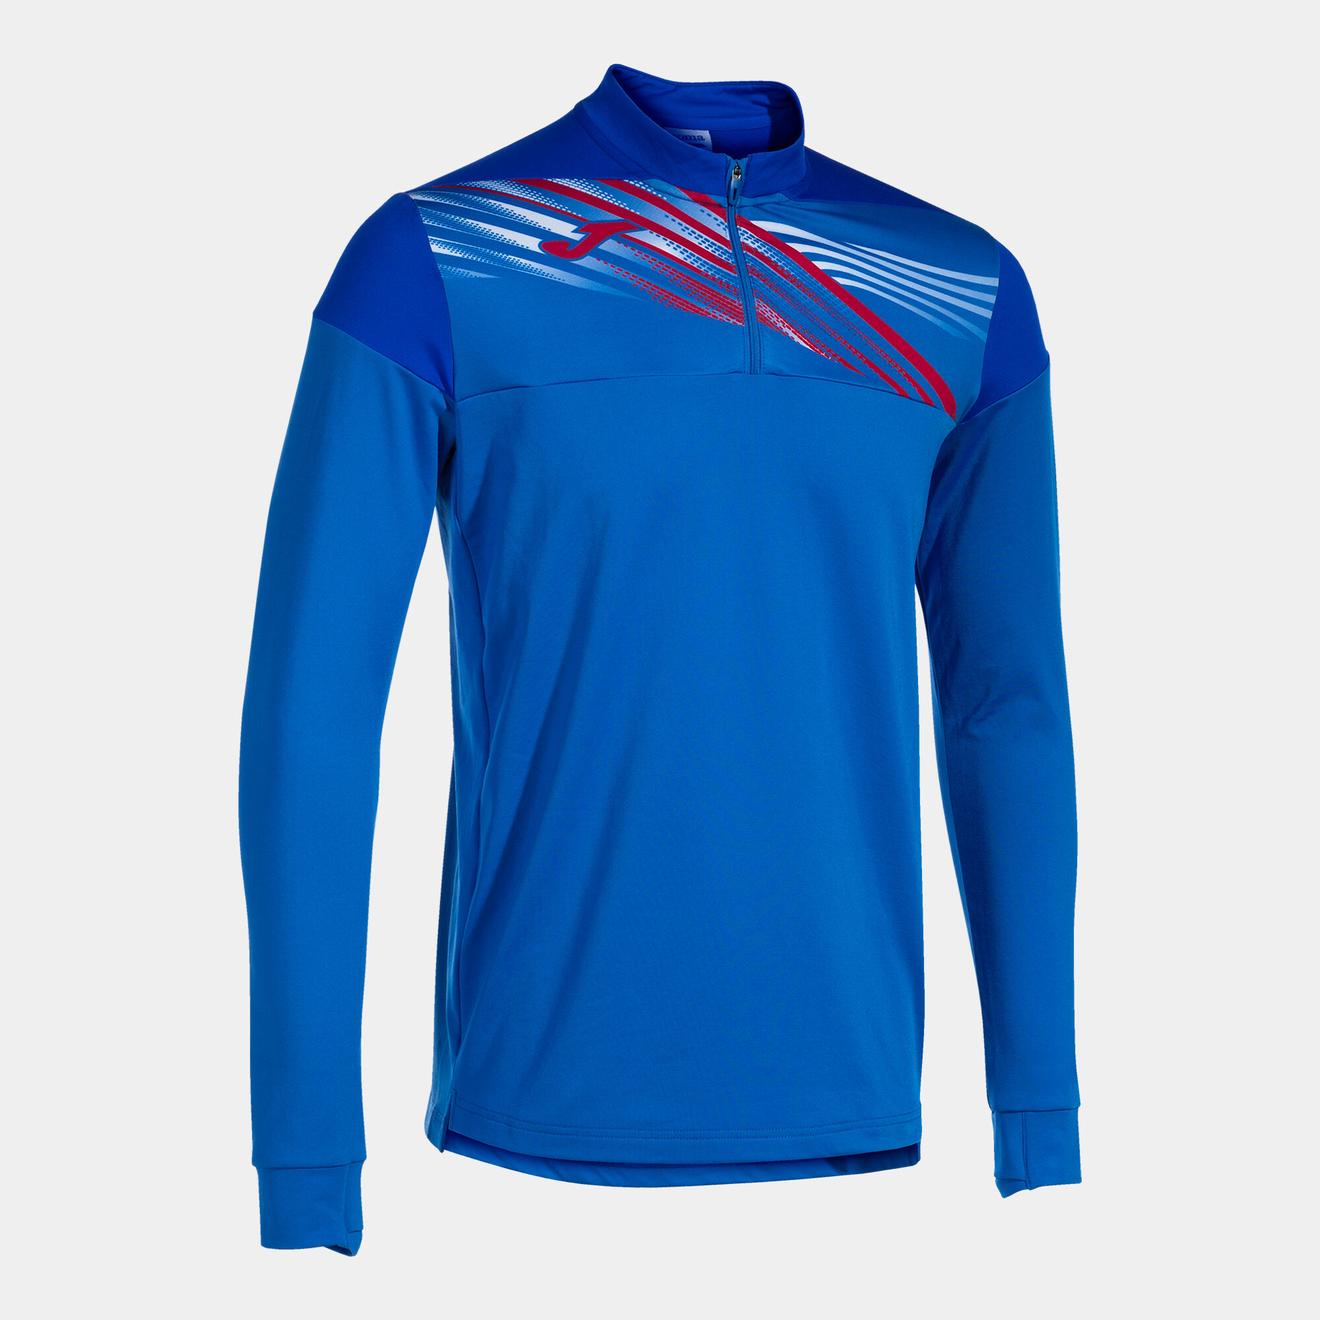 Sweatshirt man Elite X royal blue offers at £38.25 in Joma